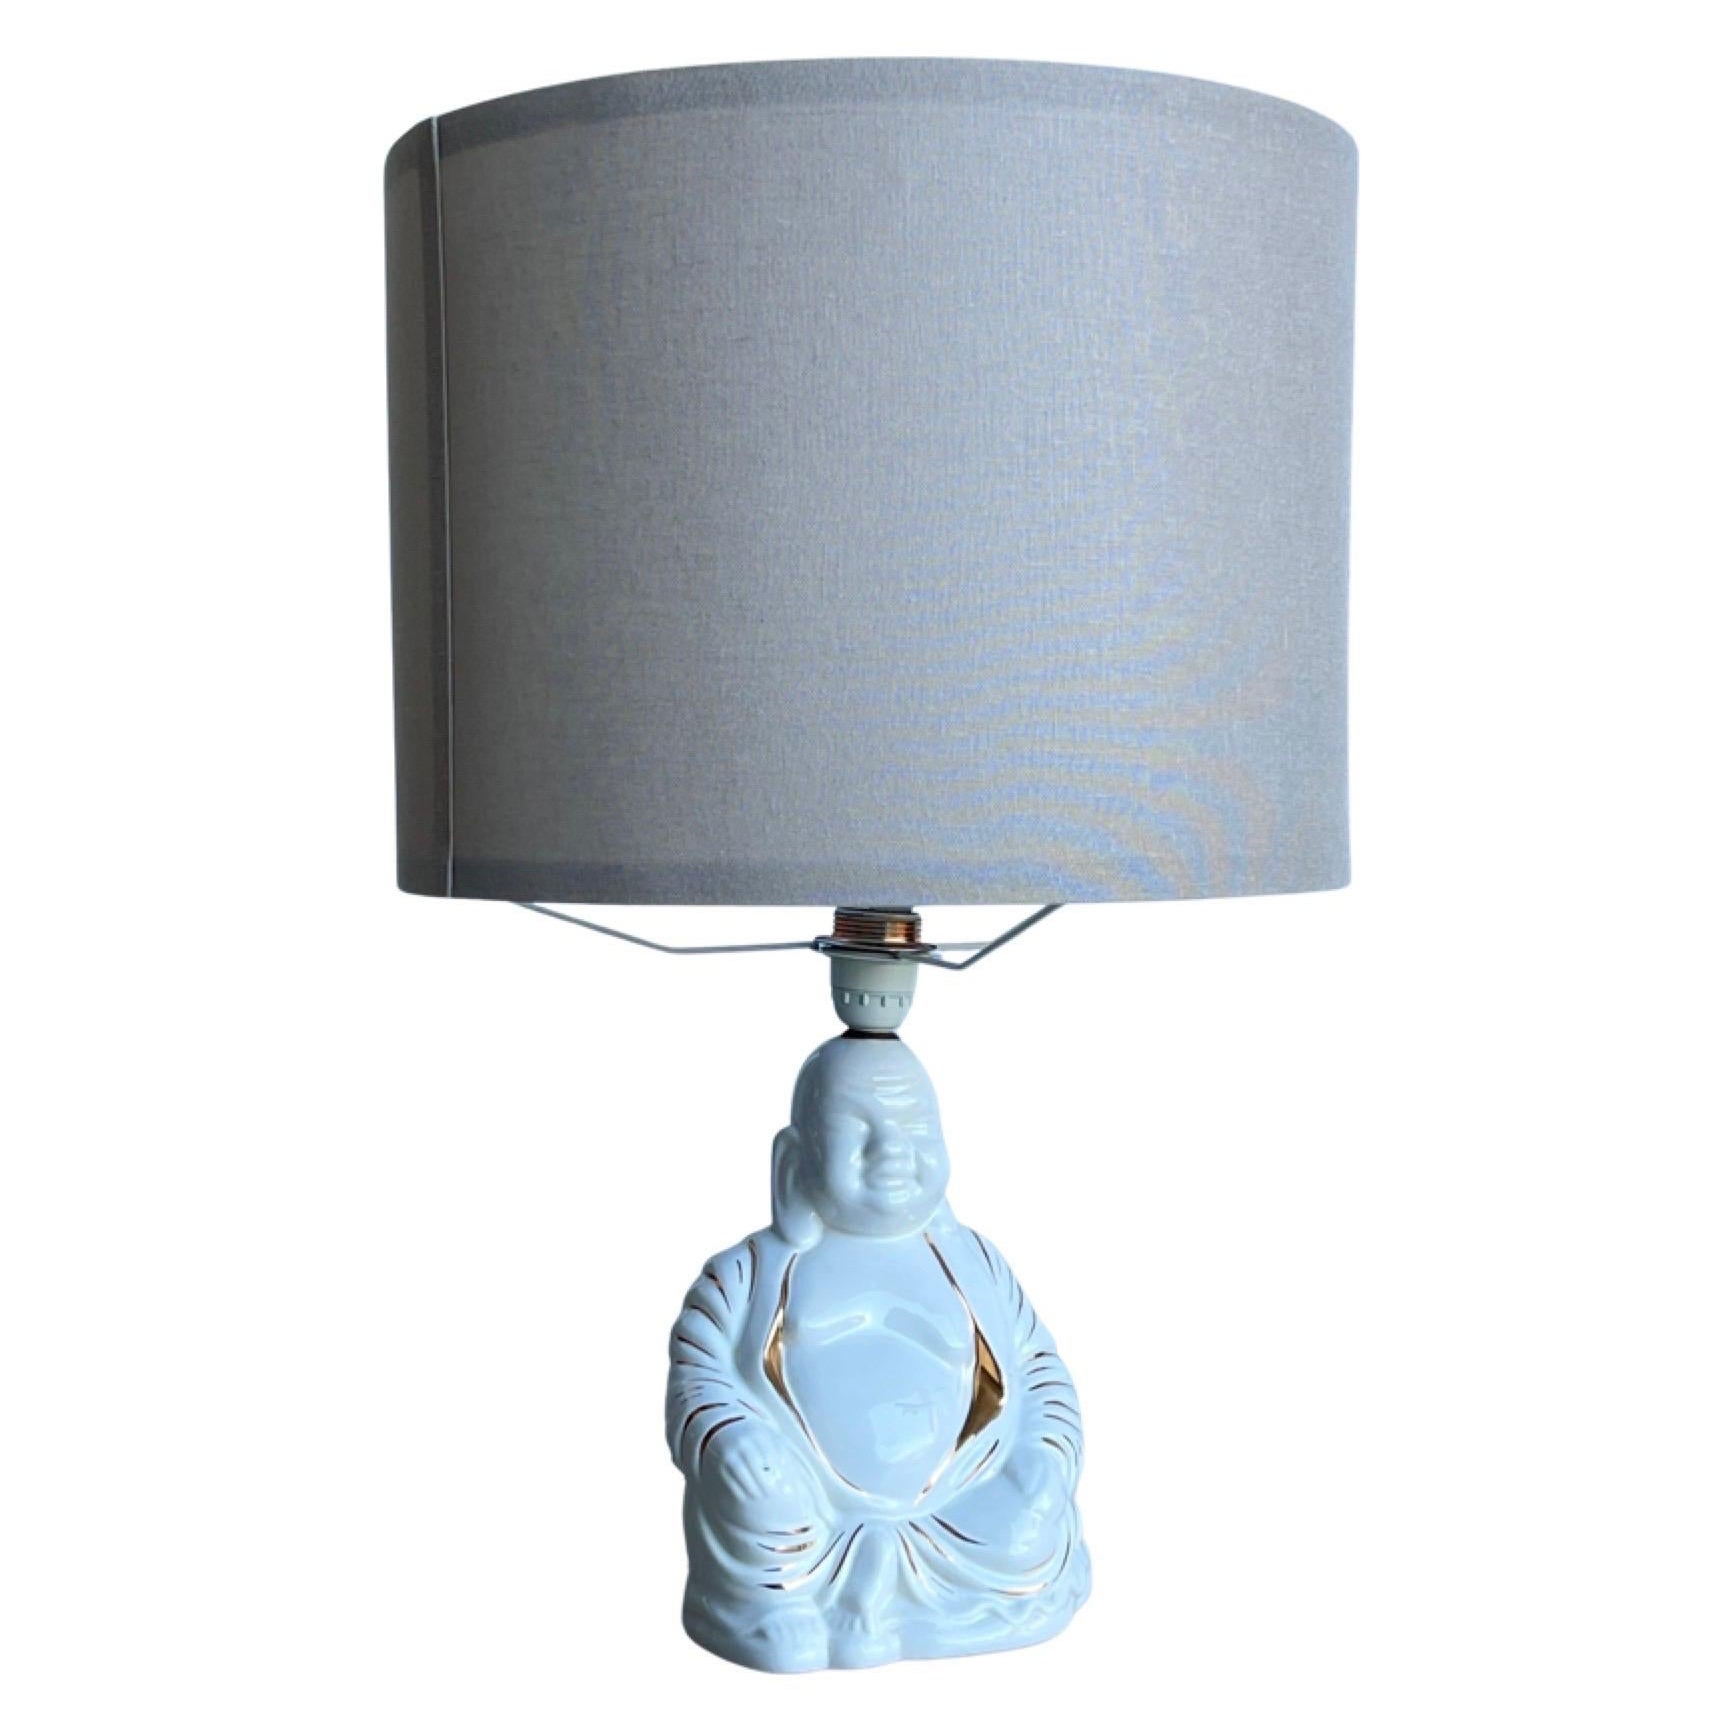 Italian Mid-Century Modern Table Lamp For Sale